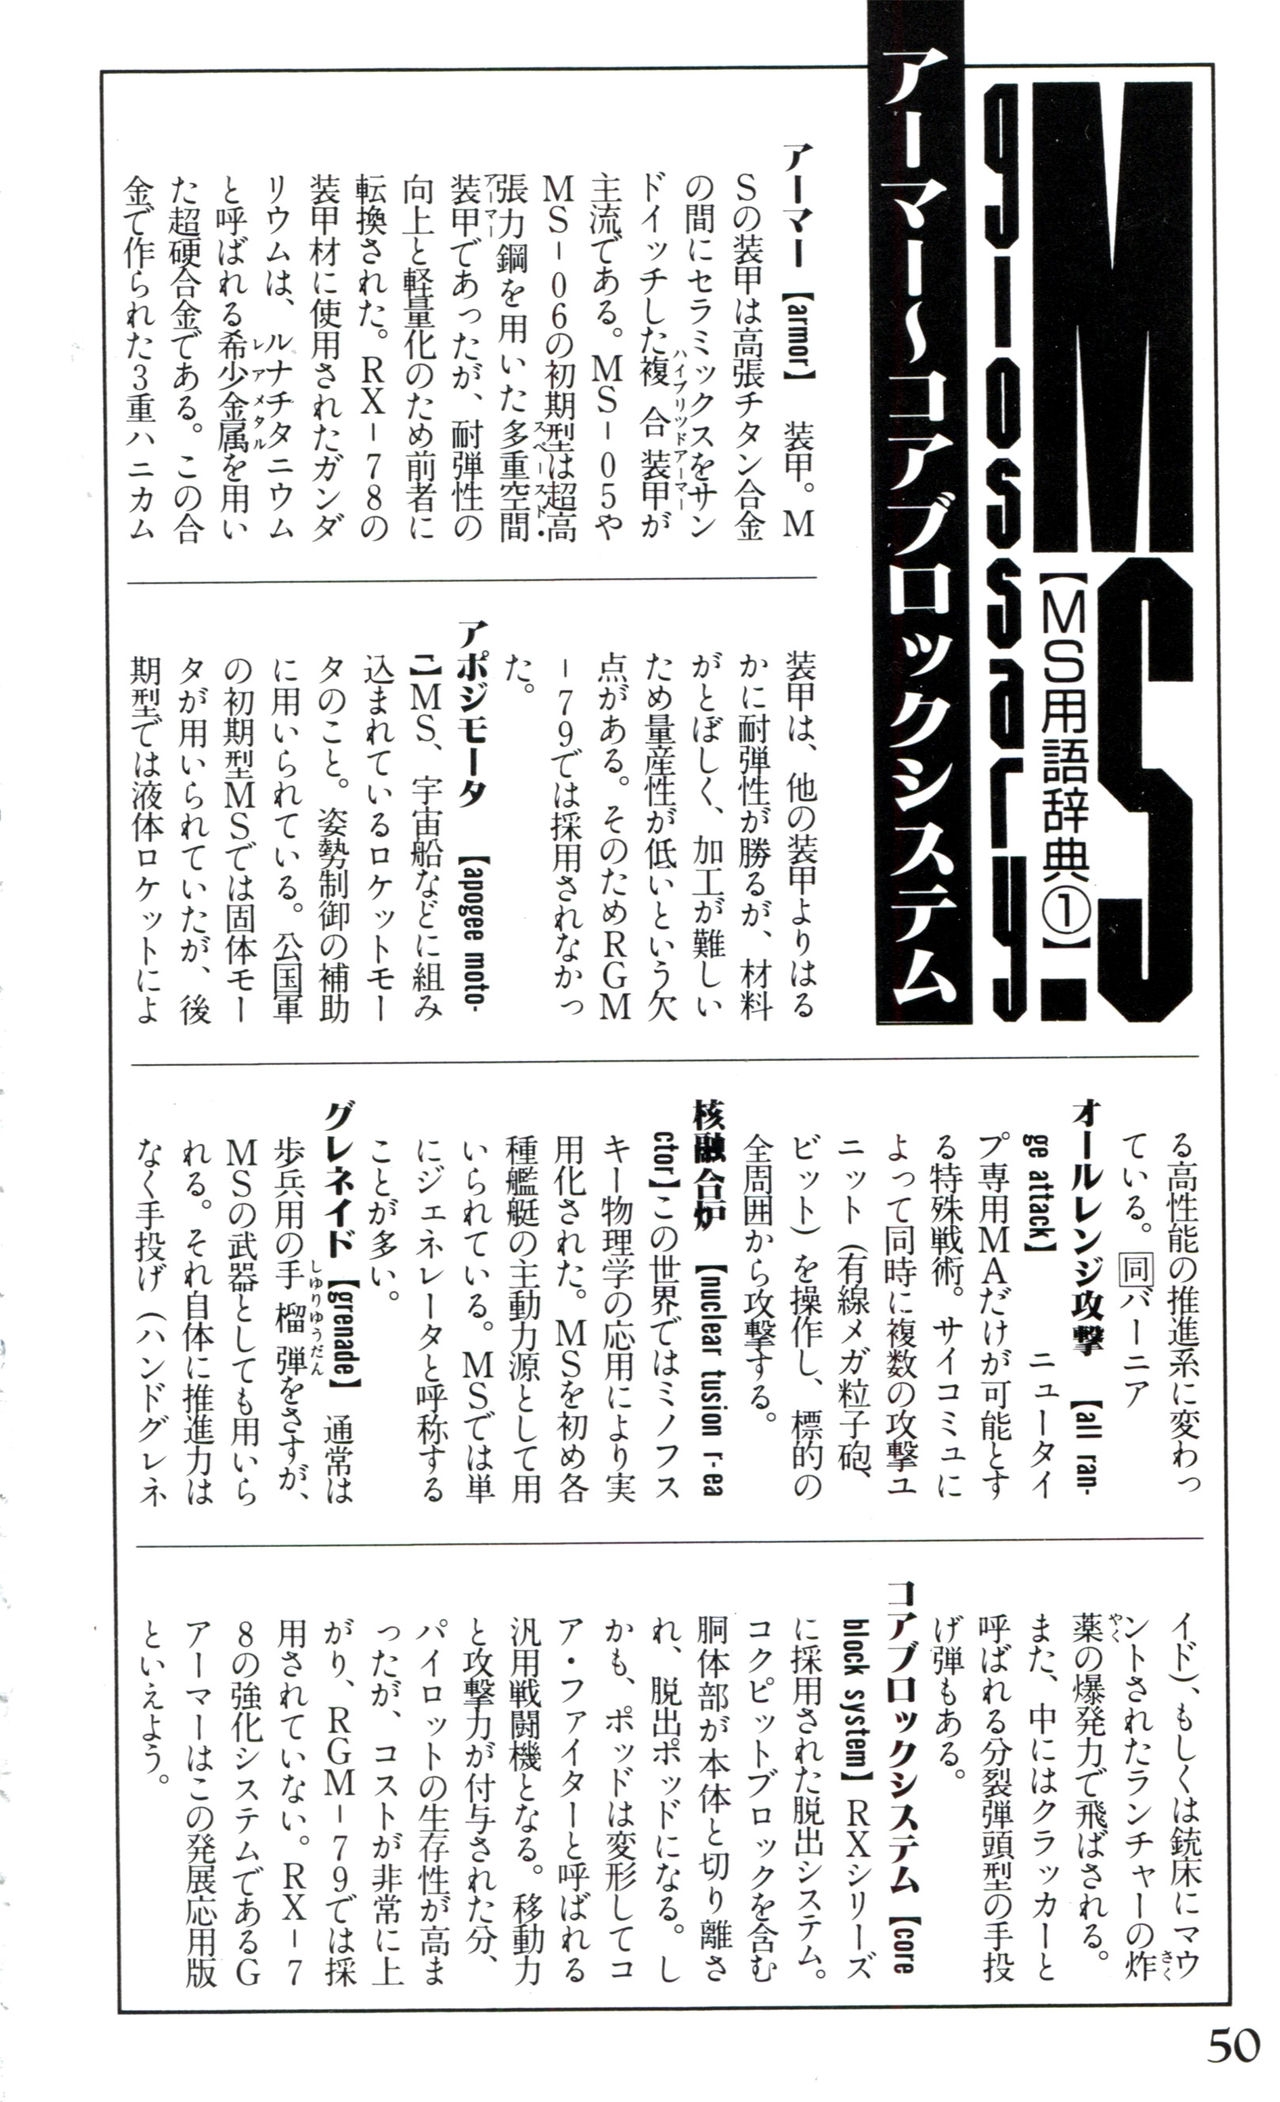 Mobile Suit Gundam U.C. Box MS Gundam Encyclopedia NO.01 - Mobile Suit Gundam 49